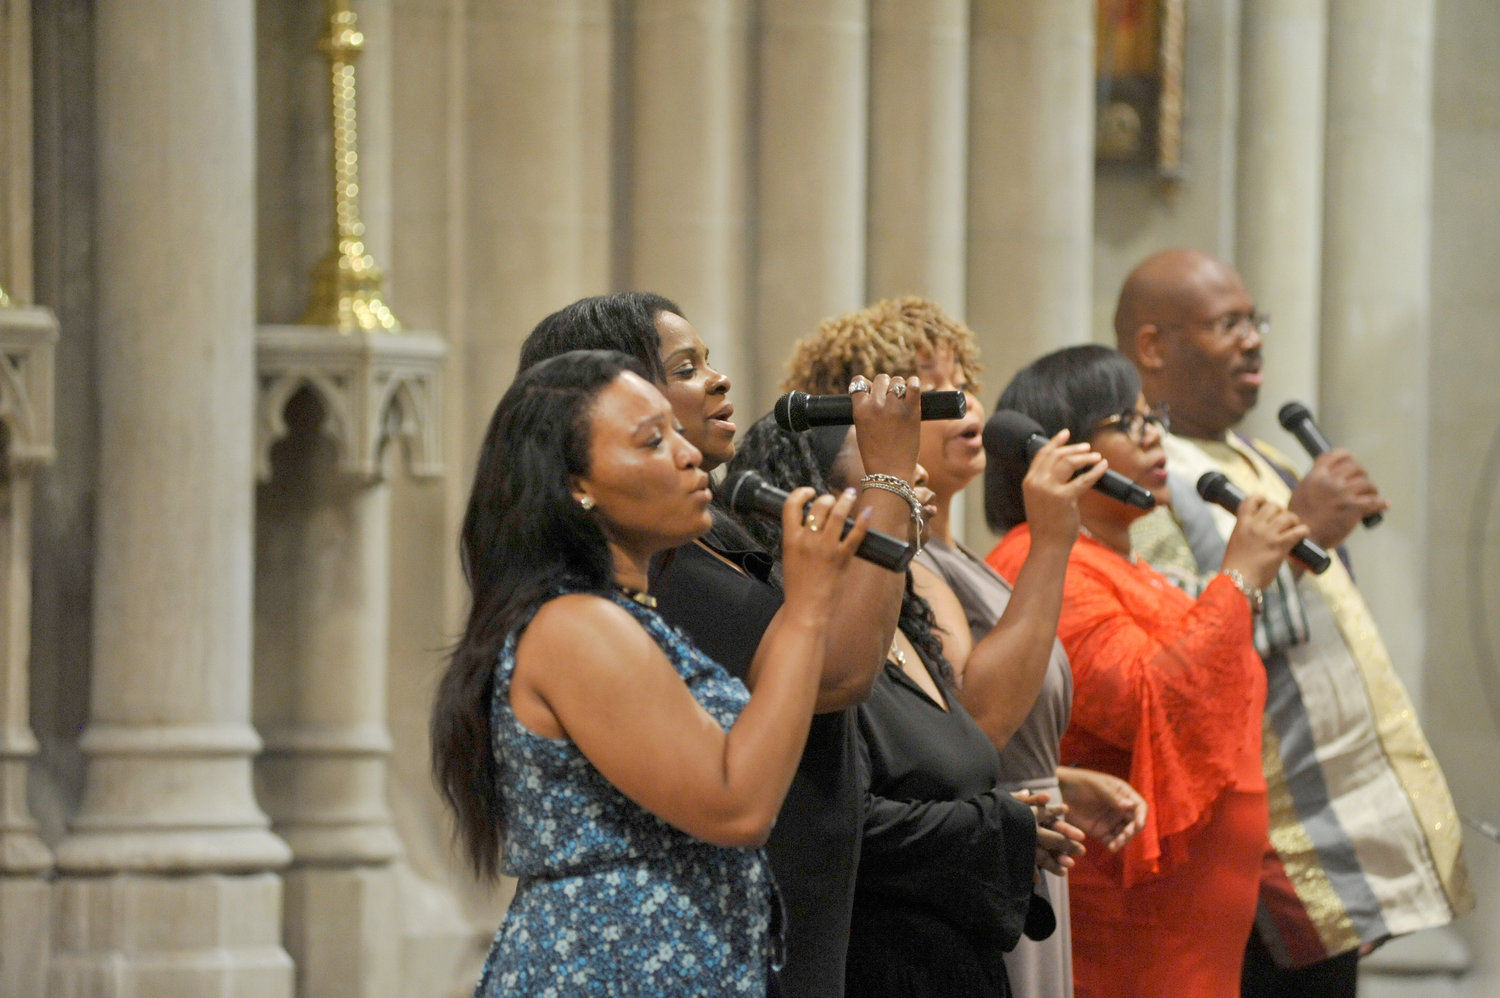 The parish’s Gospel choir sings at Mass.